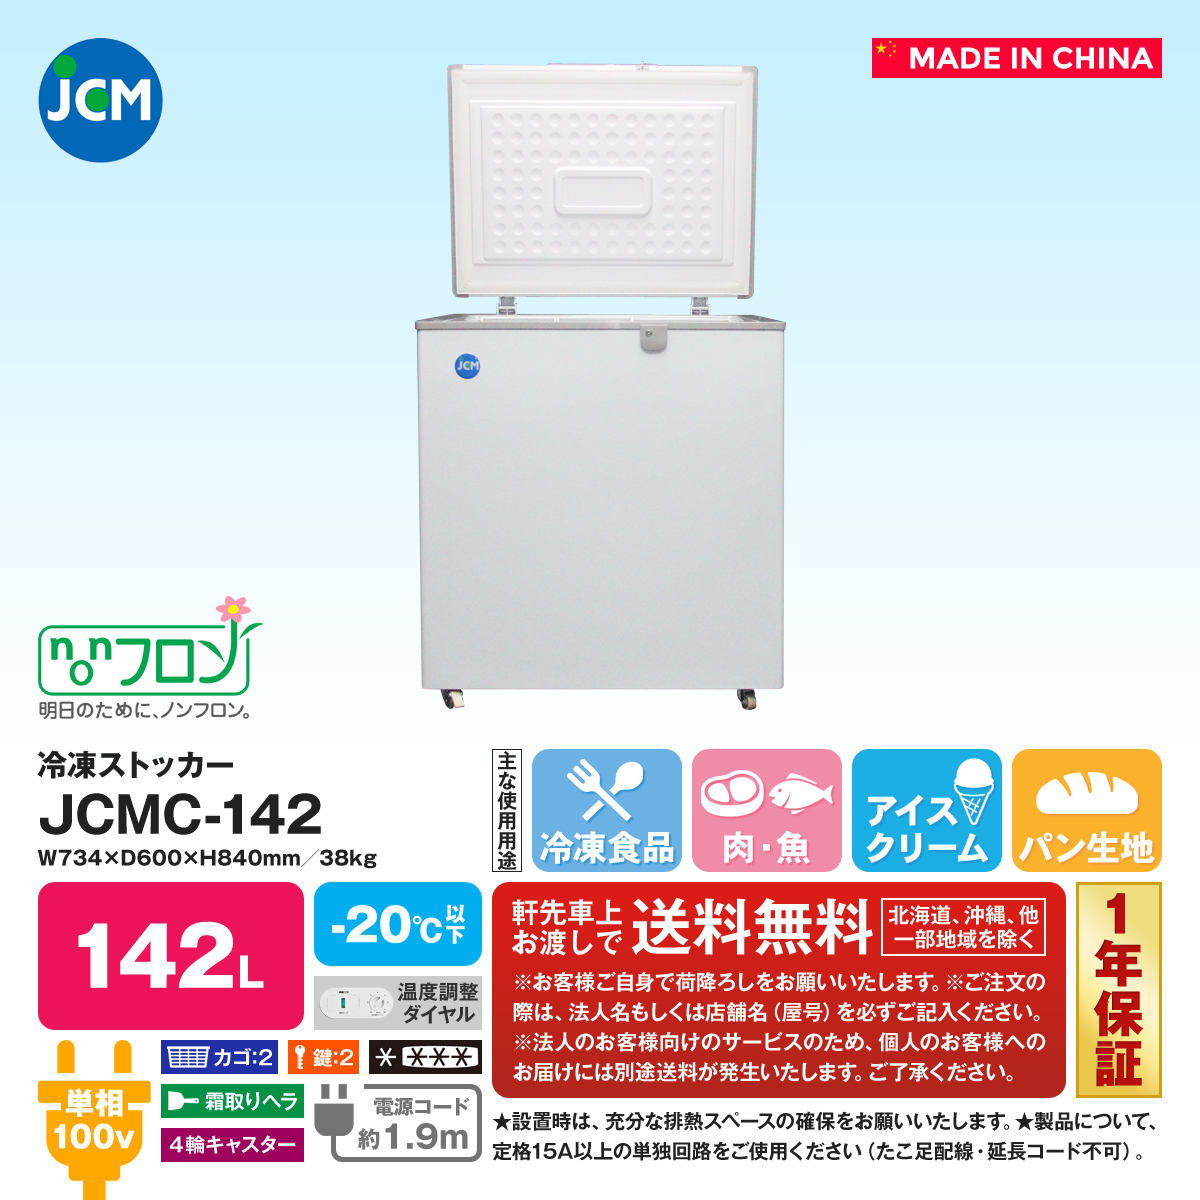 JCM 冷凍ストッカー 302L JCMC-310 業務用 ジェーシーエム 冷凍庫 保冷庫 食品ストッカー フリーザー 保存 貯蓄 - 1